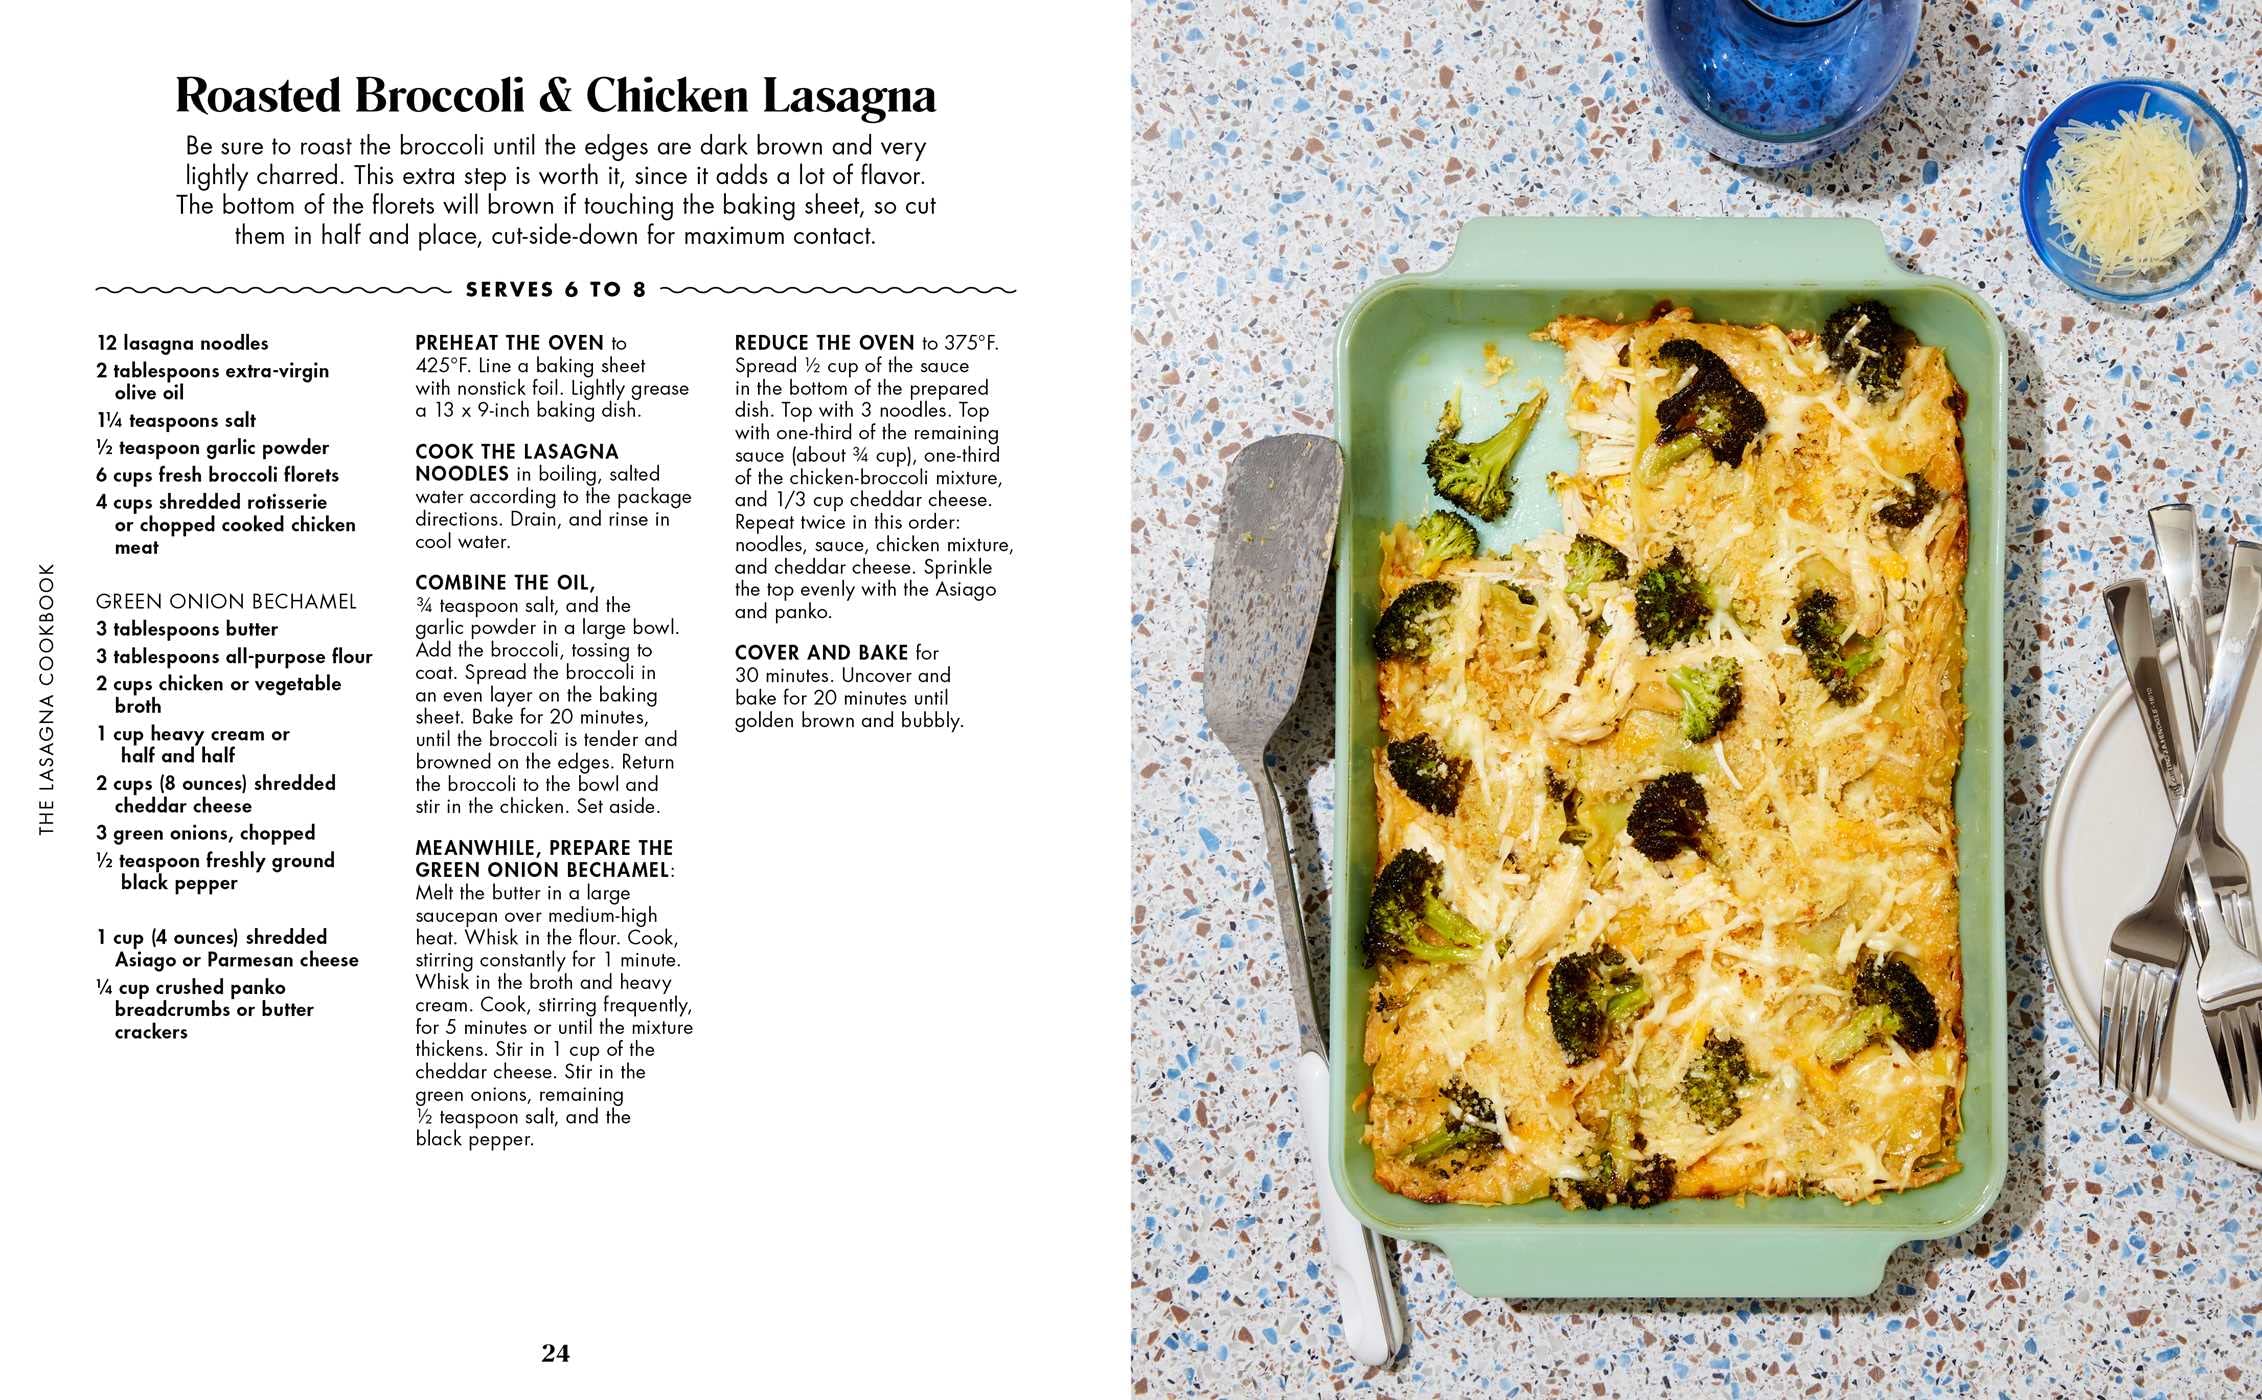 101 Lasagnas & Other Layered Casseroles: A Cookbook